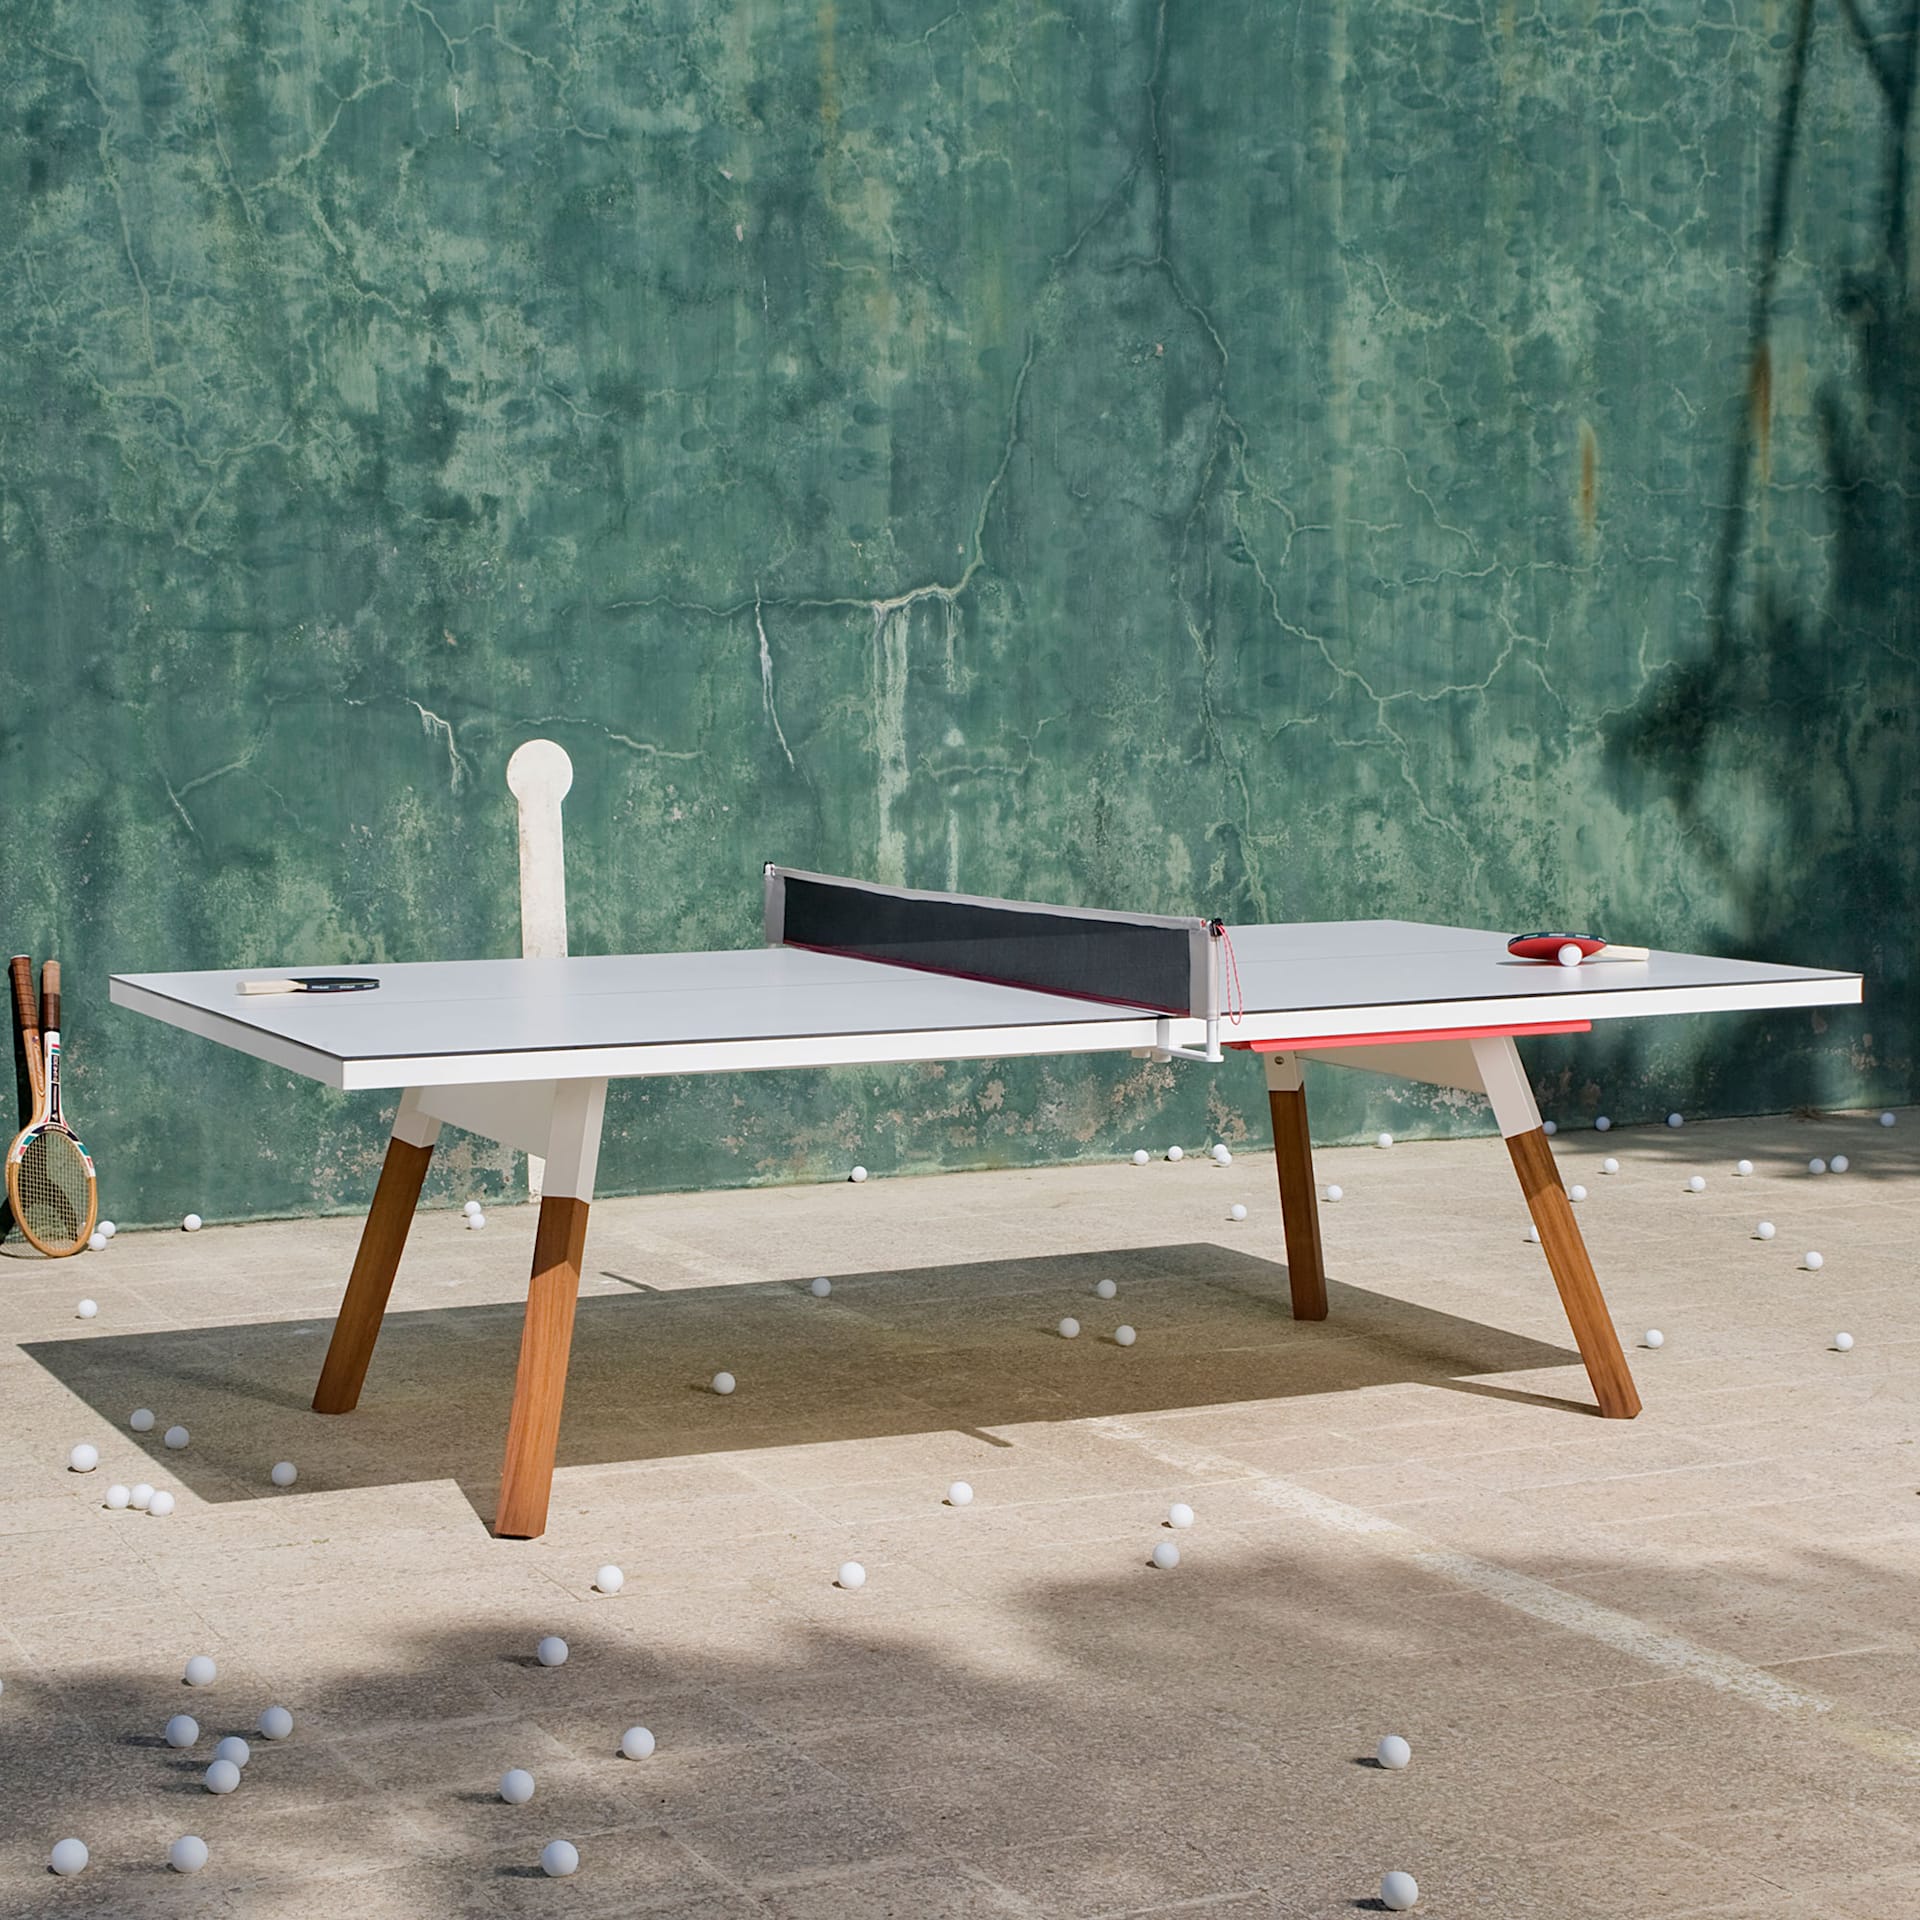 You and Me Outdoor Ping Pong Table - RS Barcelona - NO GA